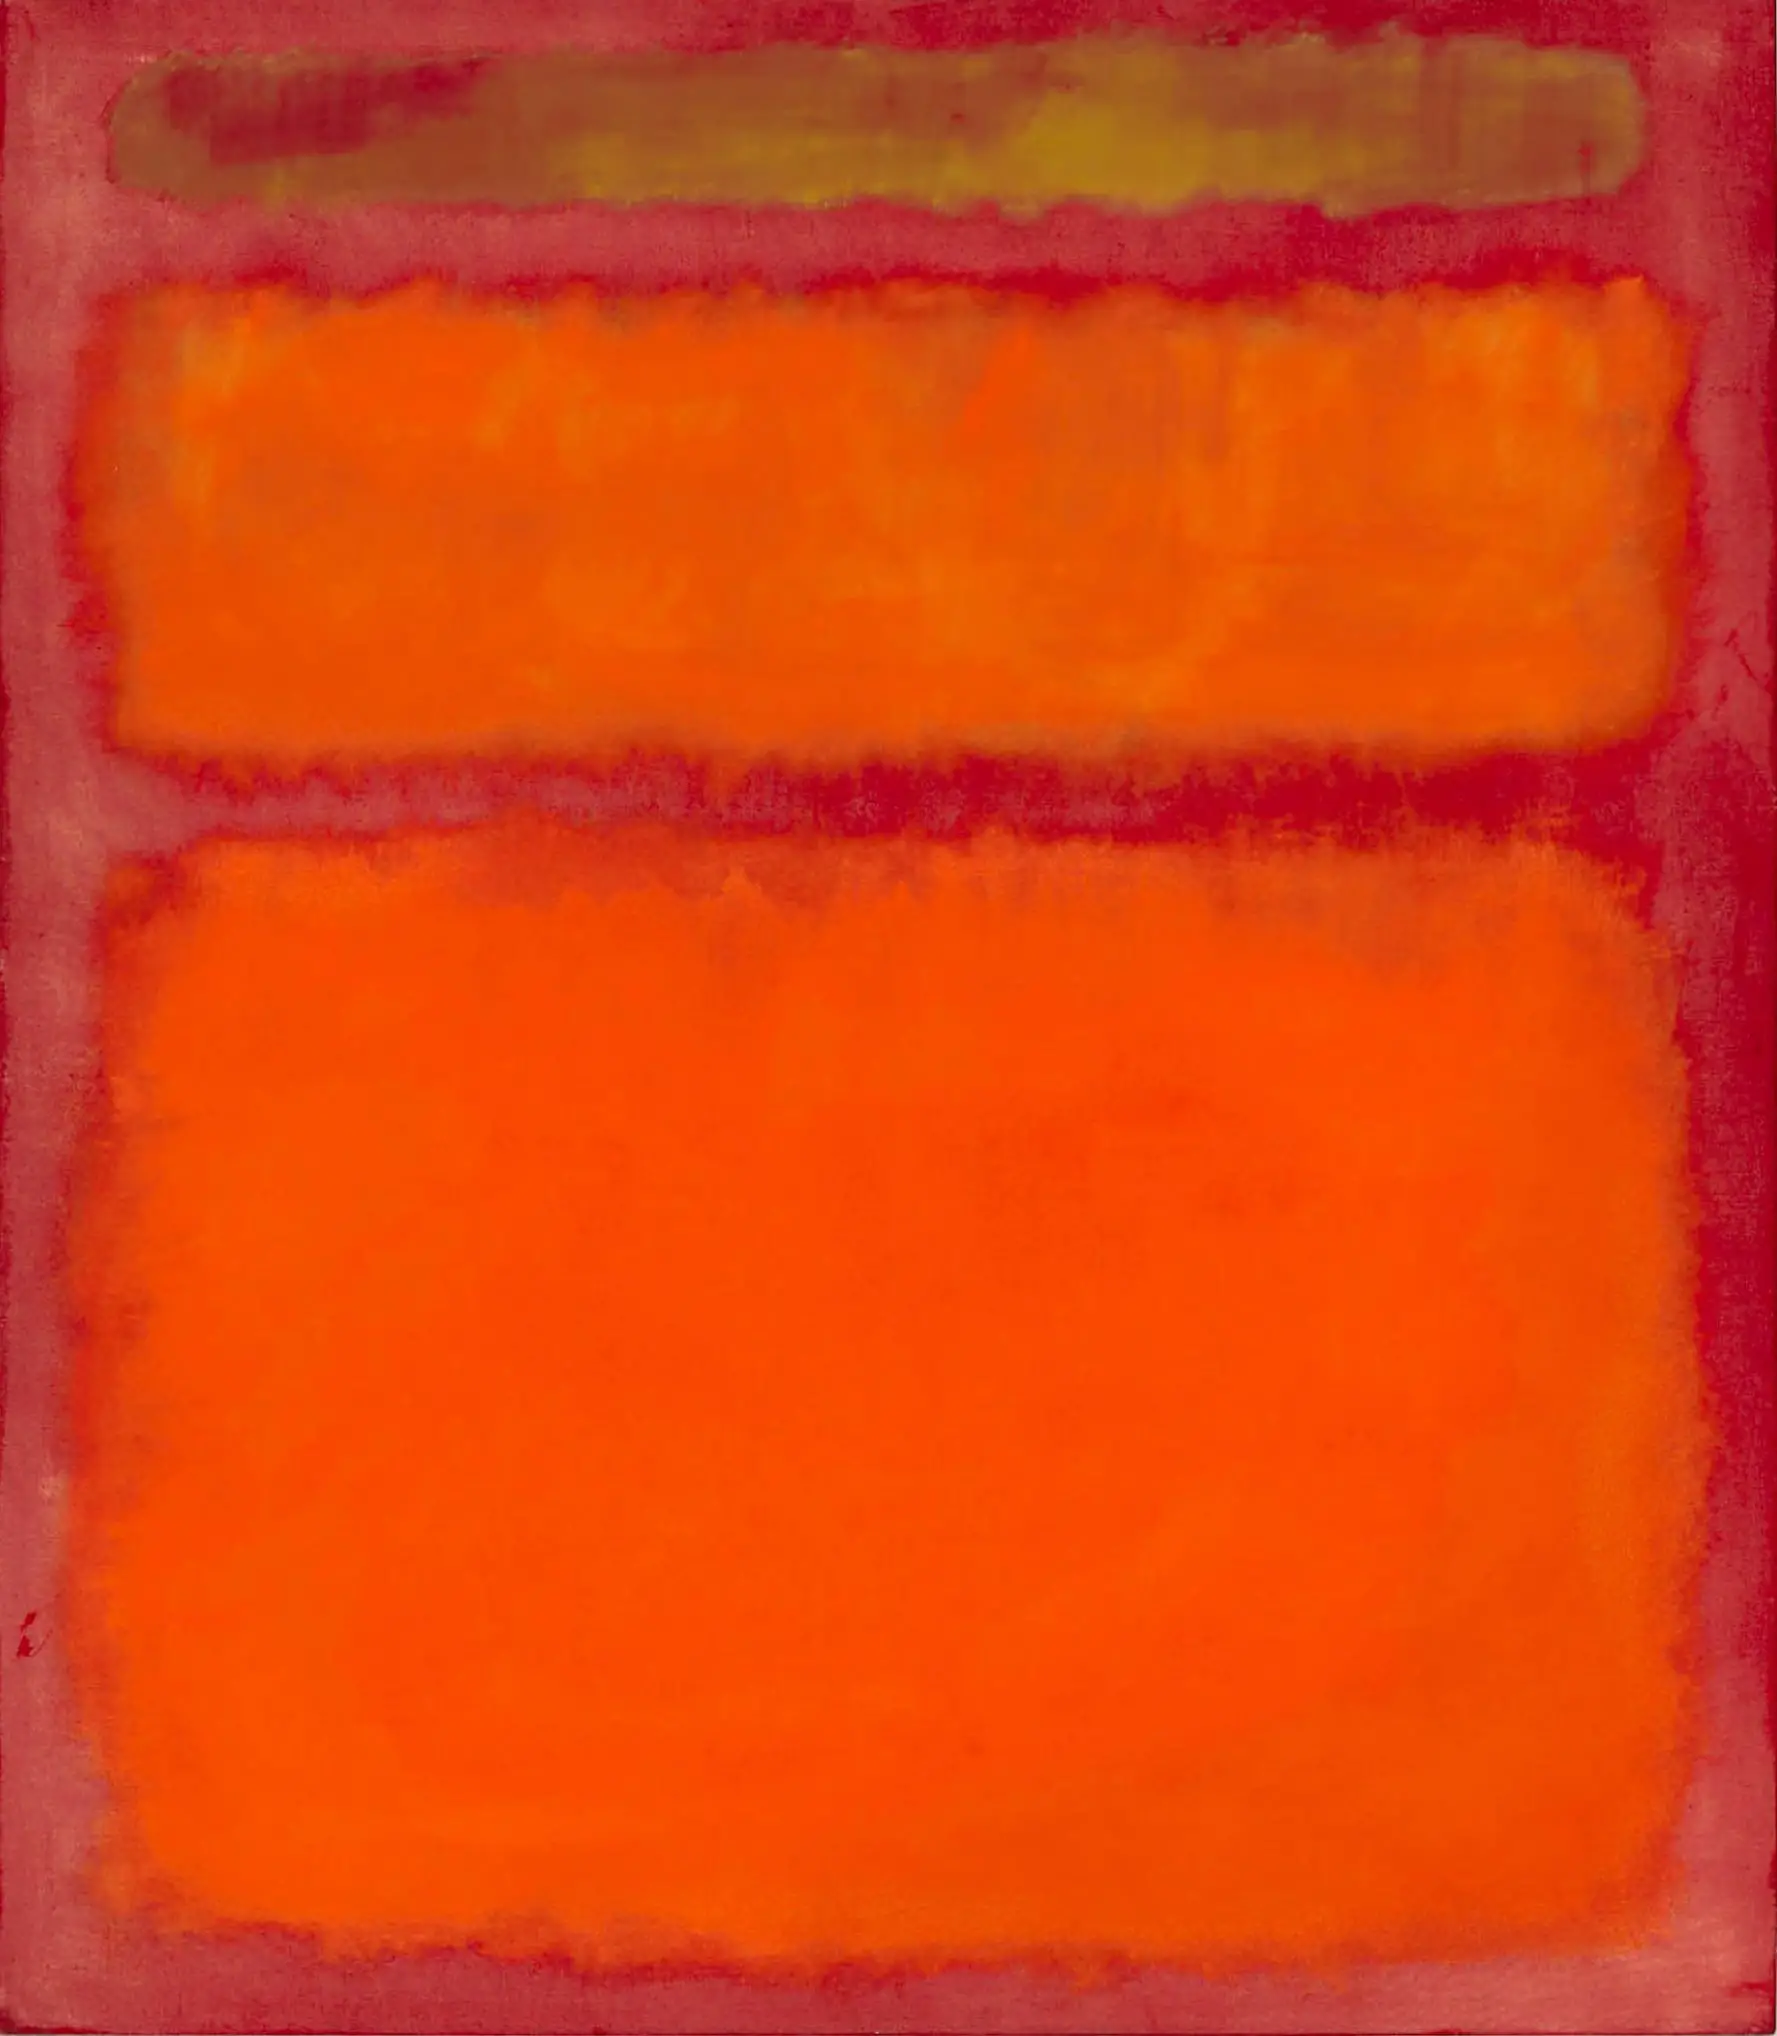 Oranje, Rood, Geel, 1961 van Mark Rothko